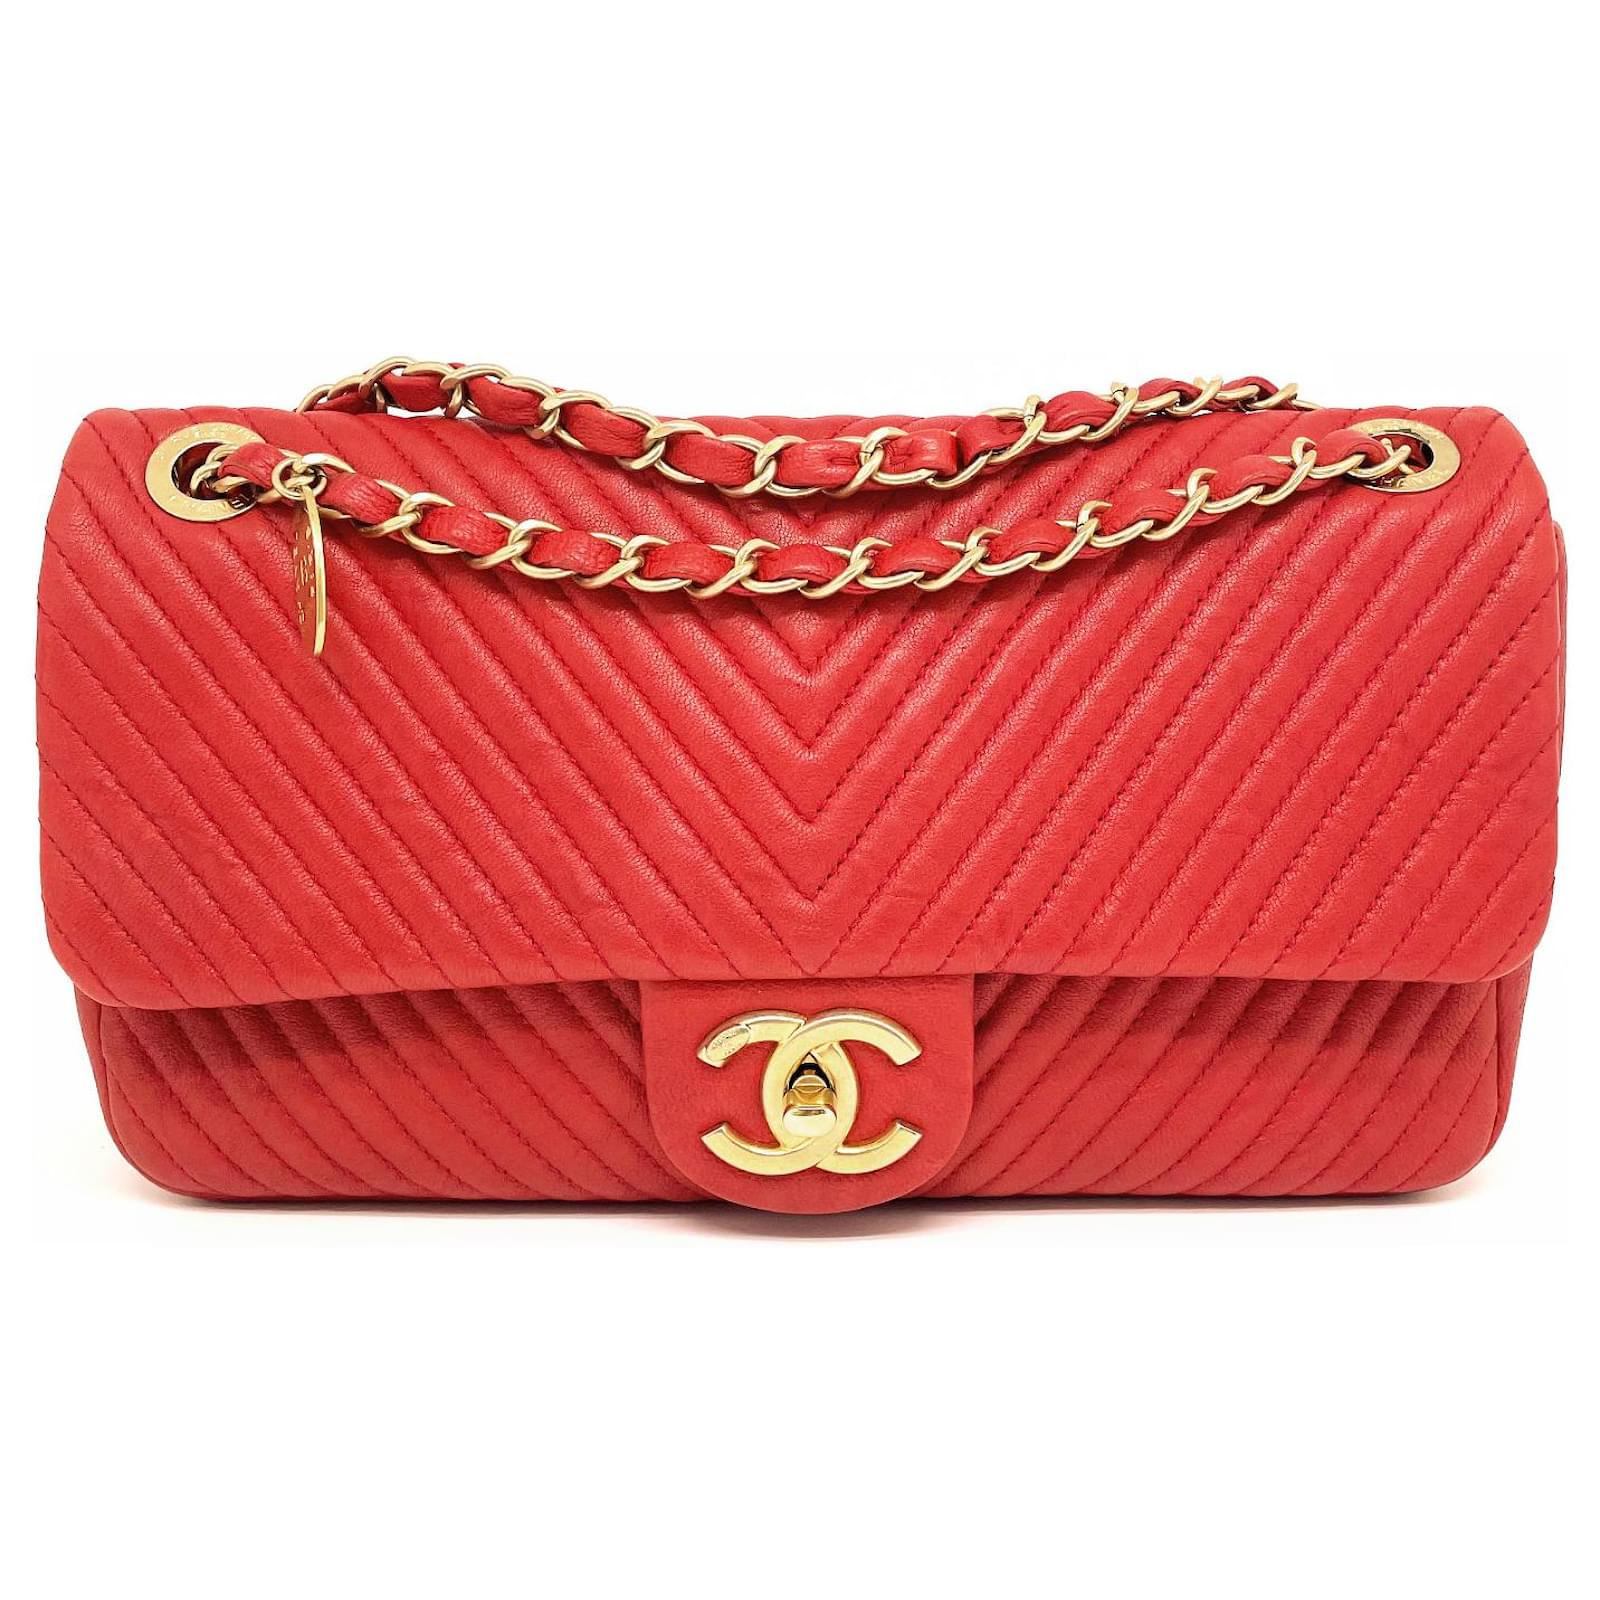 Handbags Chanel Chanel Classque Timeless Red Chevron Bag